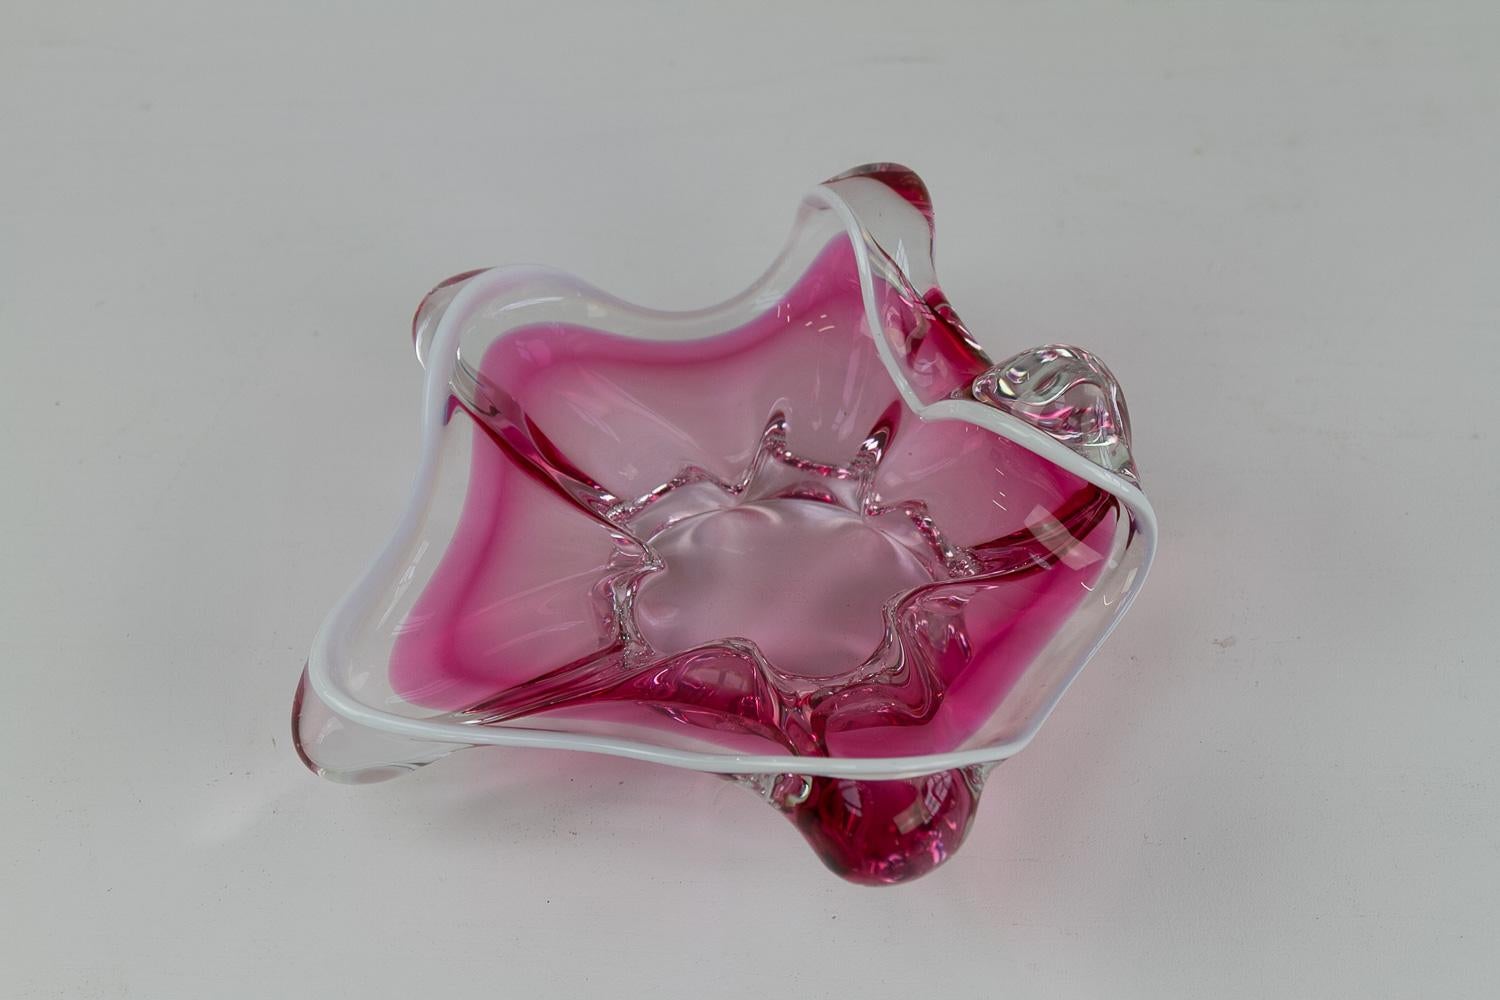 Vintage Pink Art Glass Bowl by Josef Hospodka, 1960s.
Bohemian art glass bowl attributed to Josef Hospodka, Czechoslovakia 1960s. Organic and 